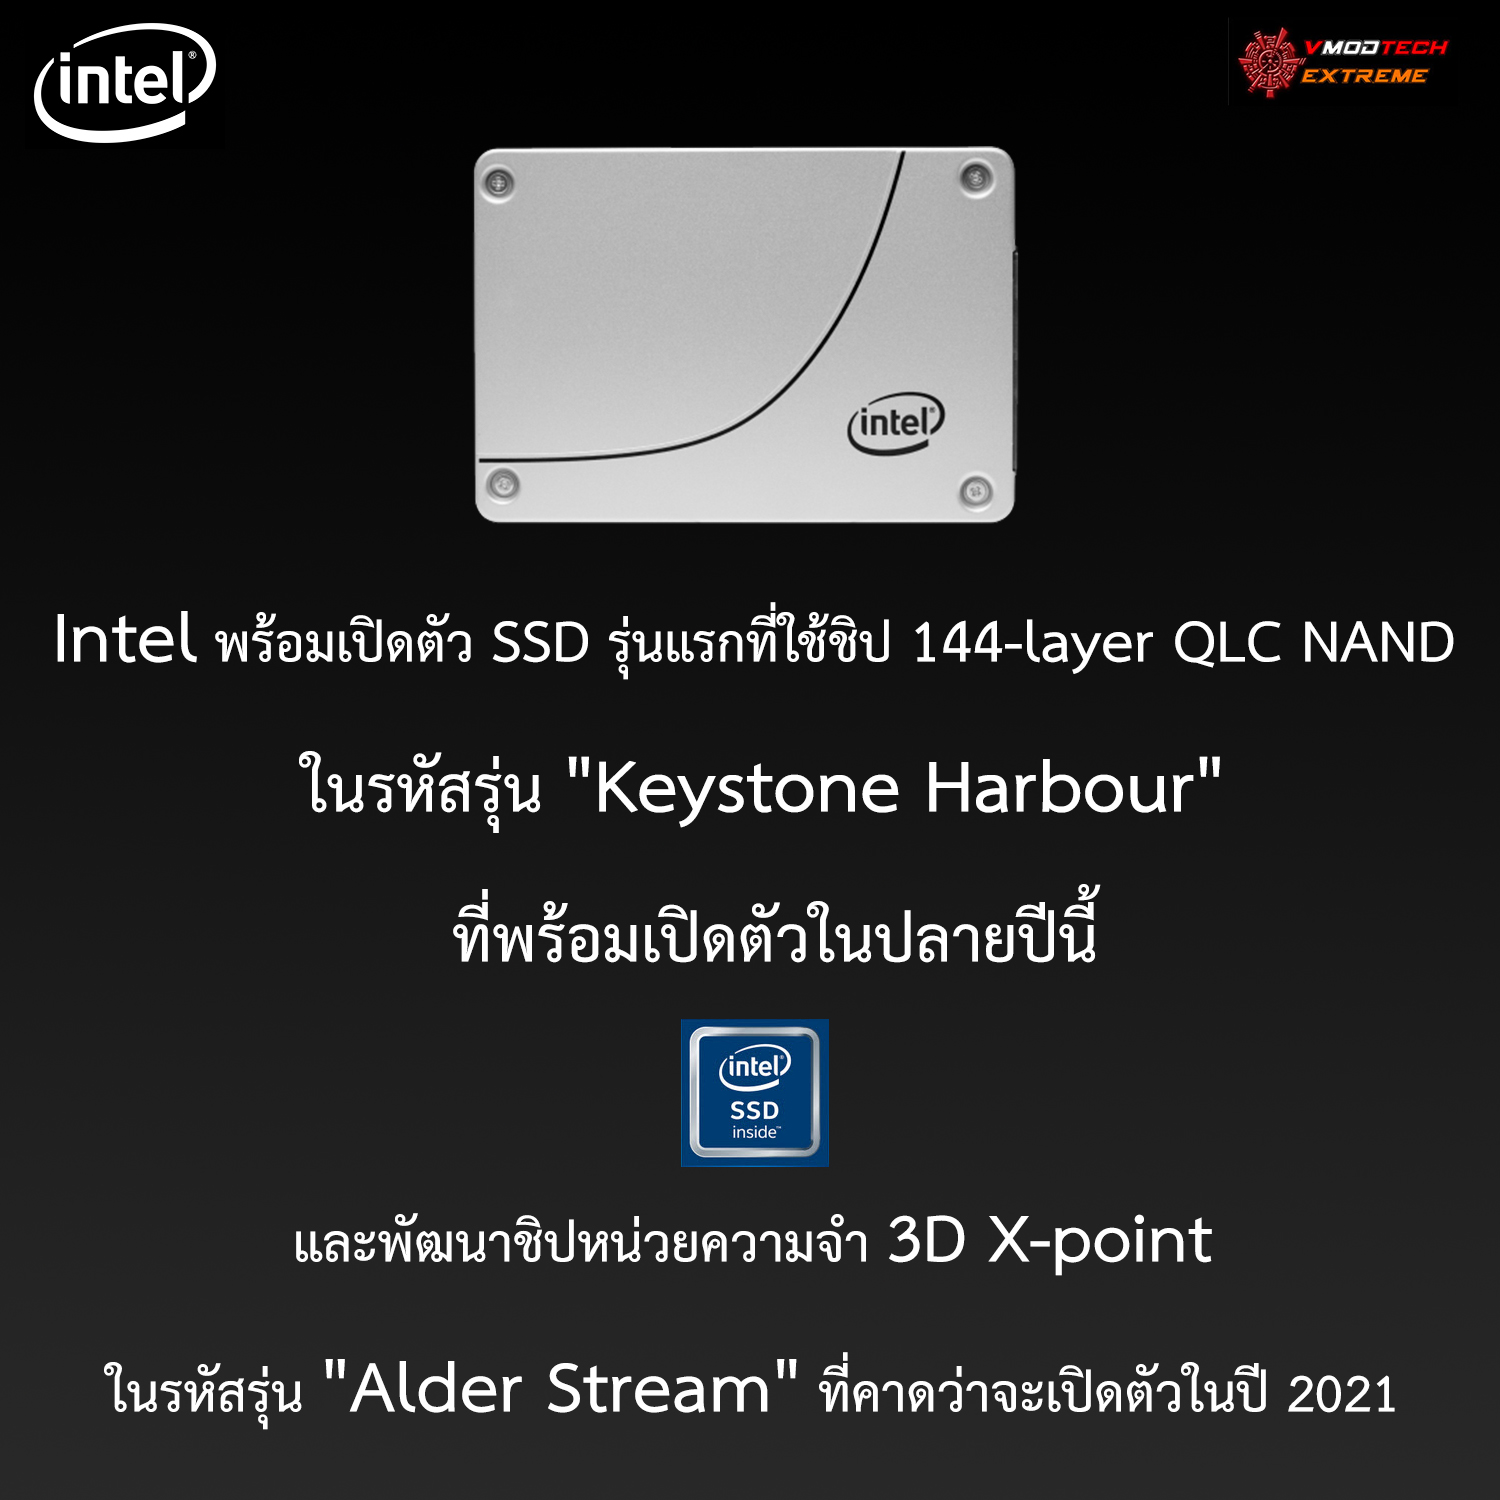 intel ssd 144 layer qlc nand keystone harbour 3d x point alder stream Intel พร้อมเปิดตัว SSD รุ่นแรกที่ใช้ชิป 144 layer QLC NAND เป็นของตัวเองในรหัสรุ่น Keystone Harbour พร้อมเปิดตัวในปลายปีนี้และพัฒนาชิปหน่วยความจำ 3D X point ในรหัสรุ่น Alder Stream ที่คาดว่าจะเปิดตัวในปี 2021 